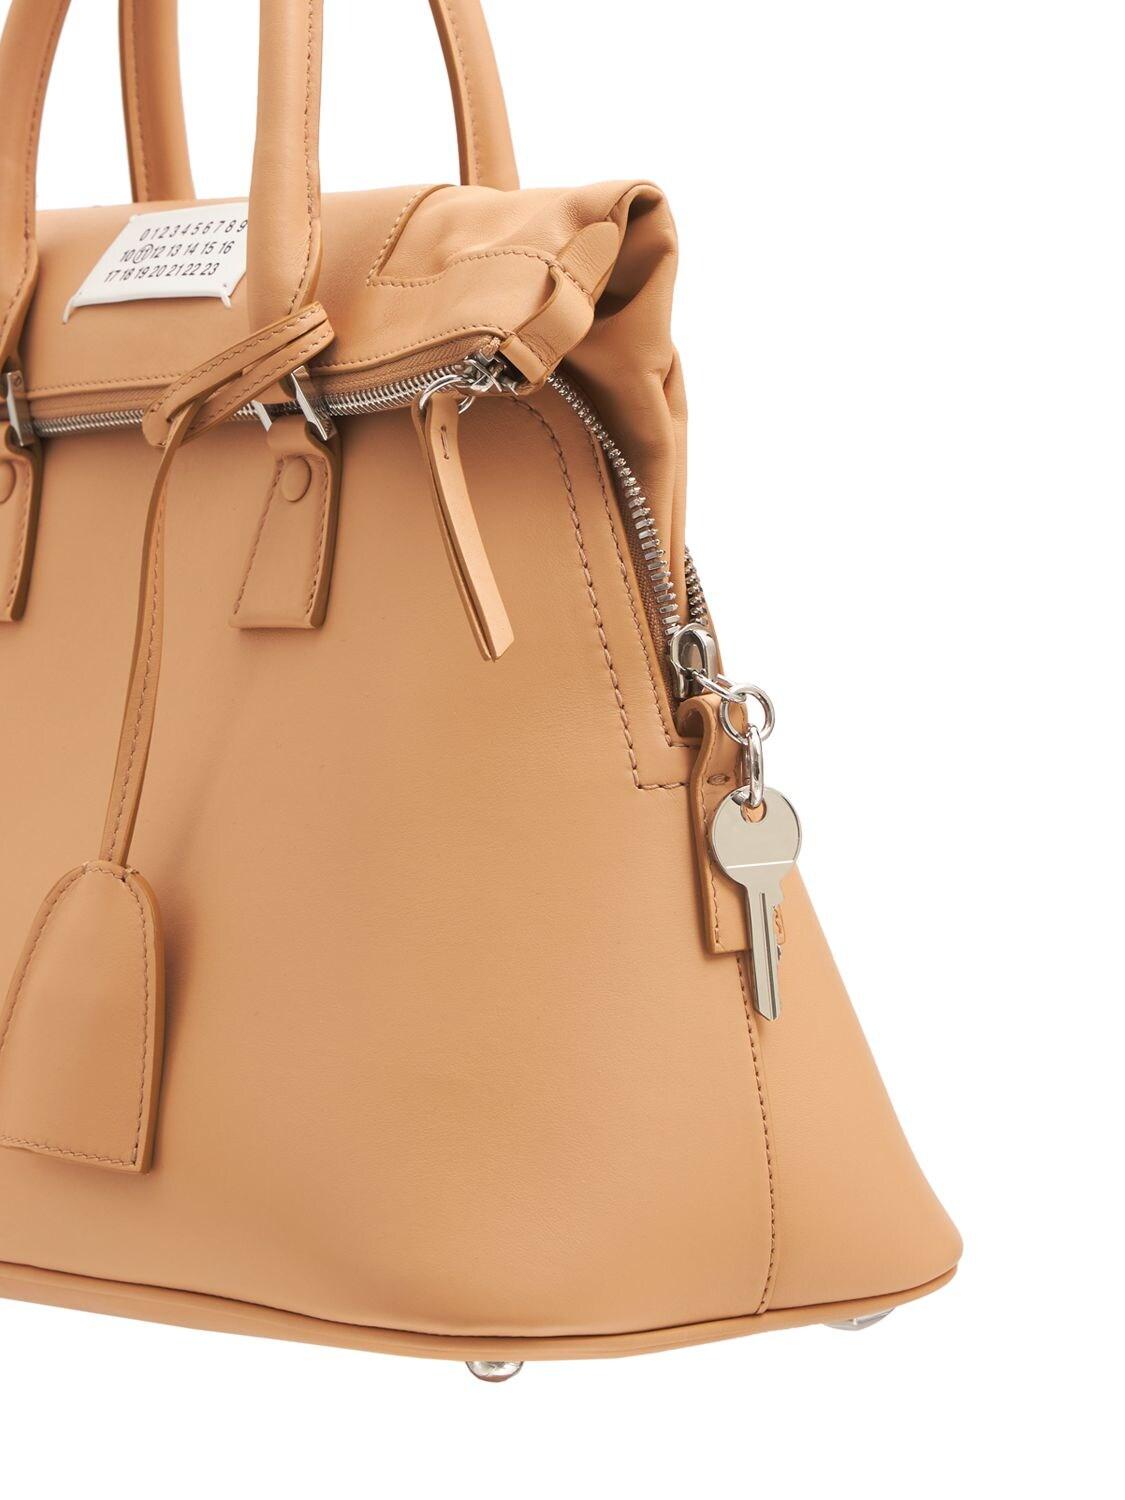 Maison Margiela Medium 5ac Soft Leather Top Handle Bag in Nude 